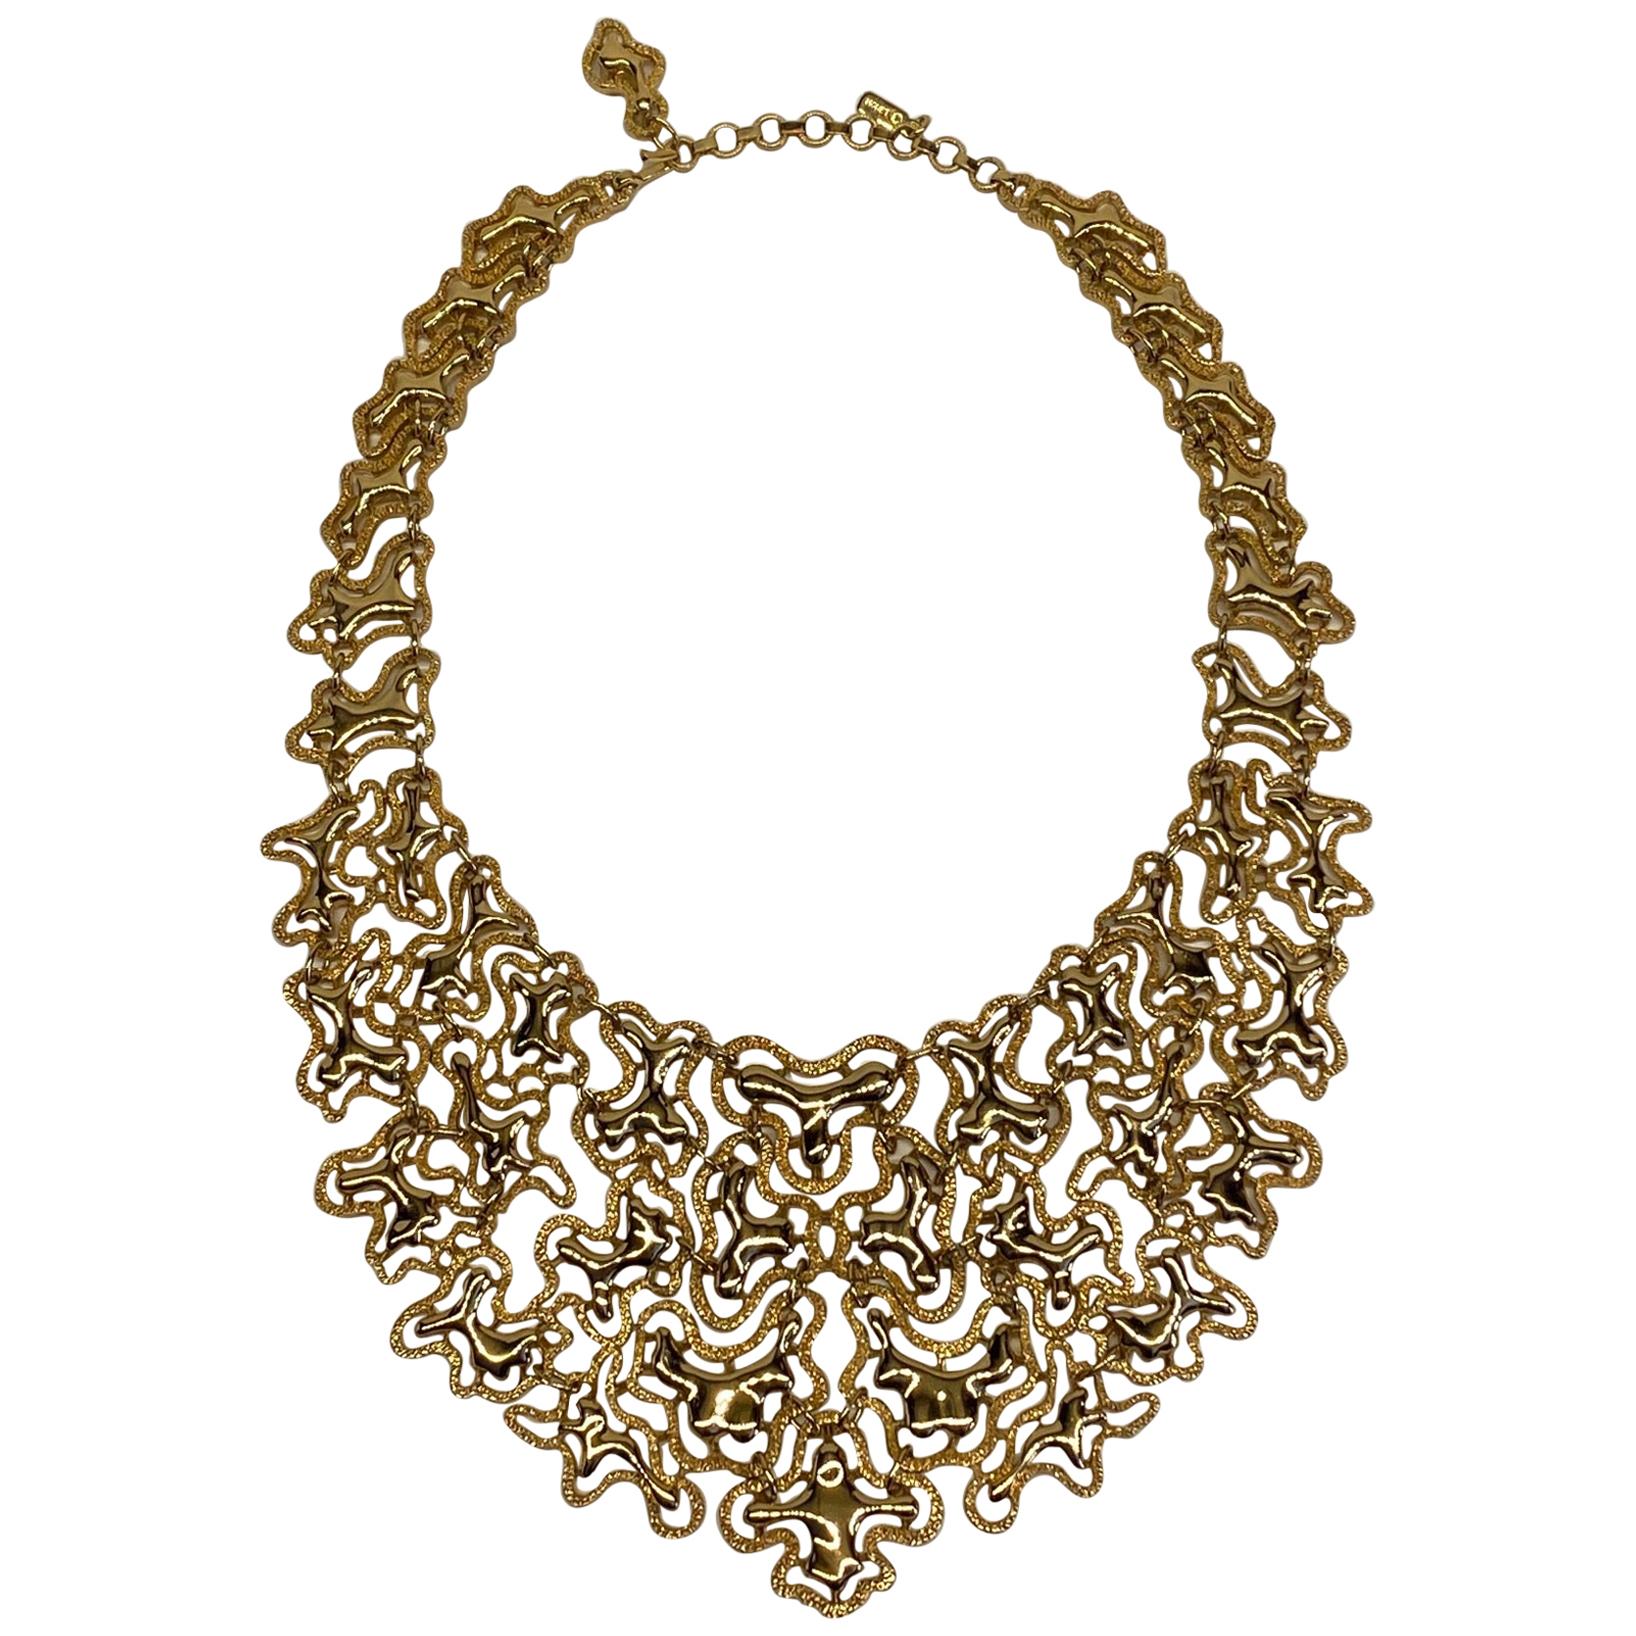 Monet 1974 "Mandira" Collection Gold Bib Necklace